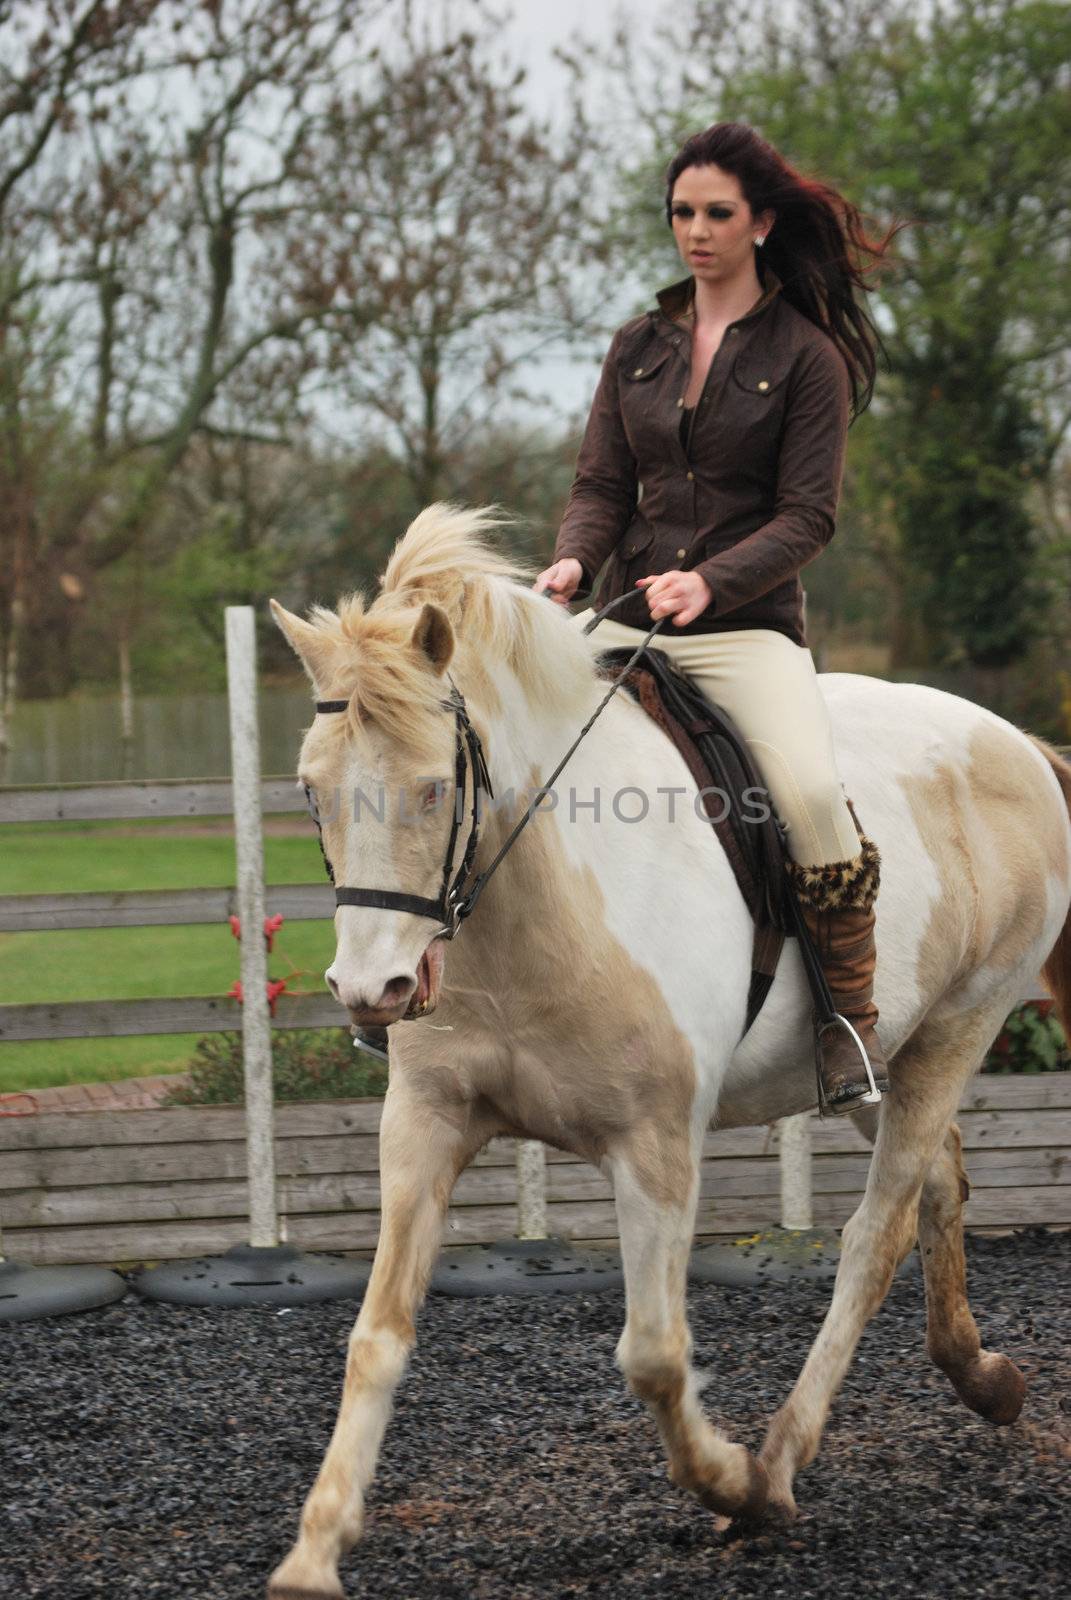 pretty girl riding horse